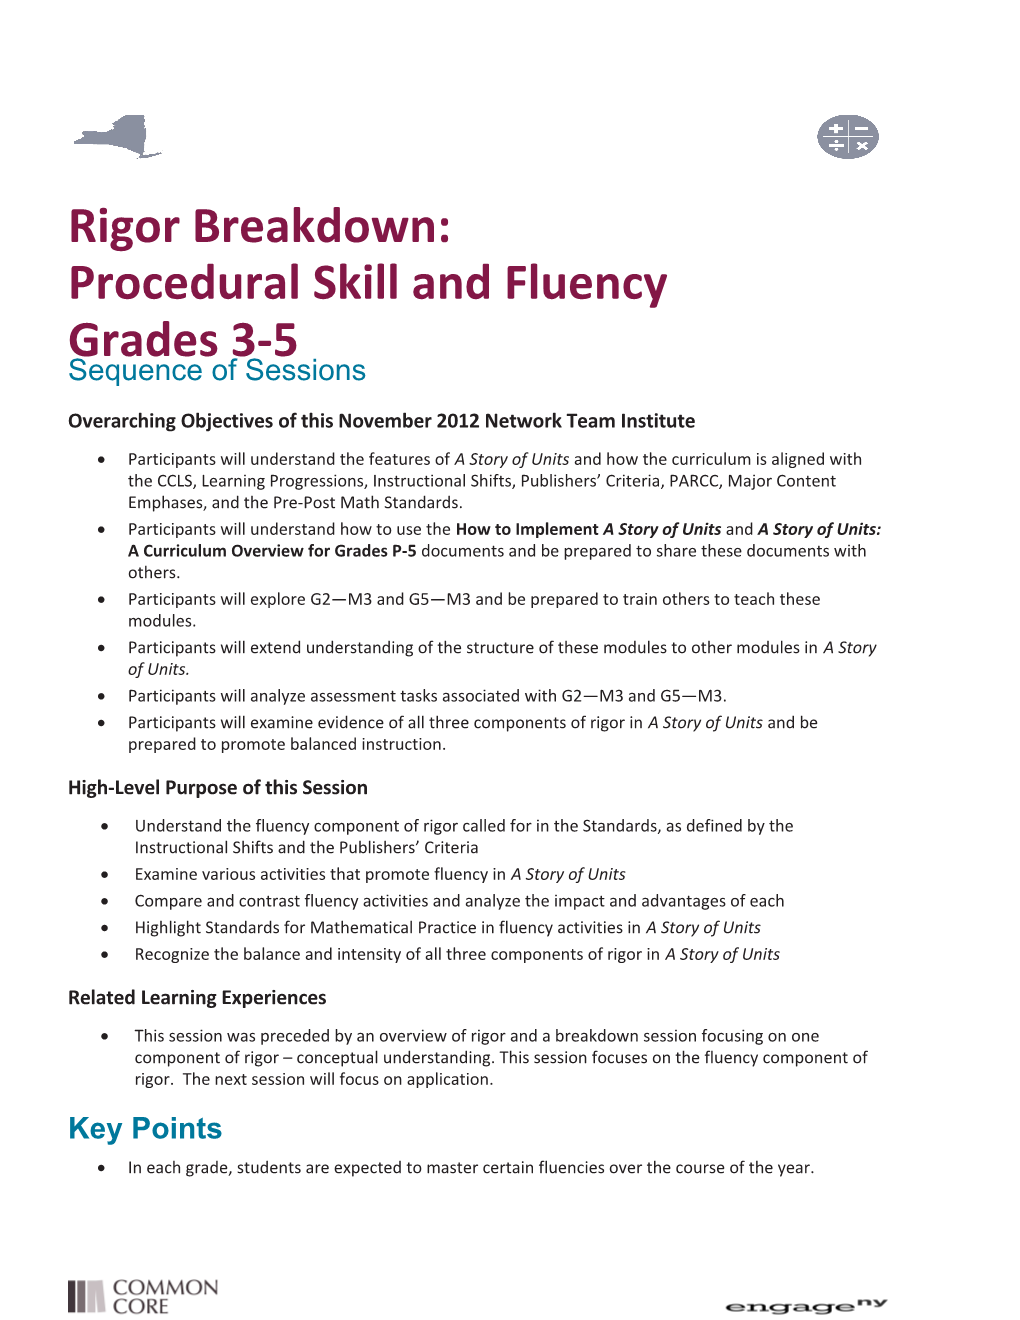 Rigor Breakdown: Procedural Skill and Fluency